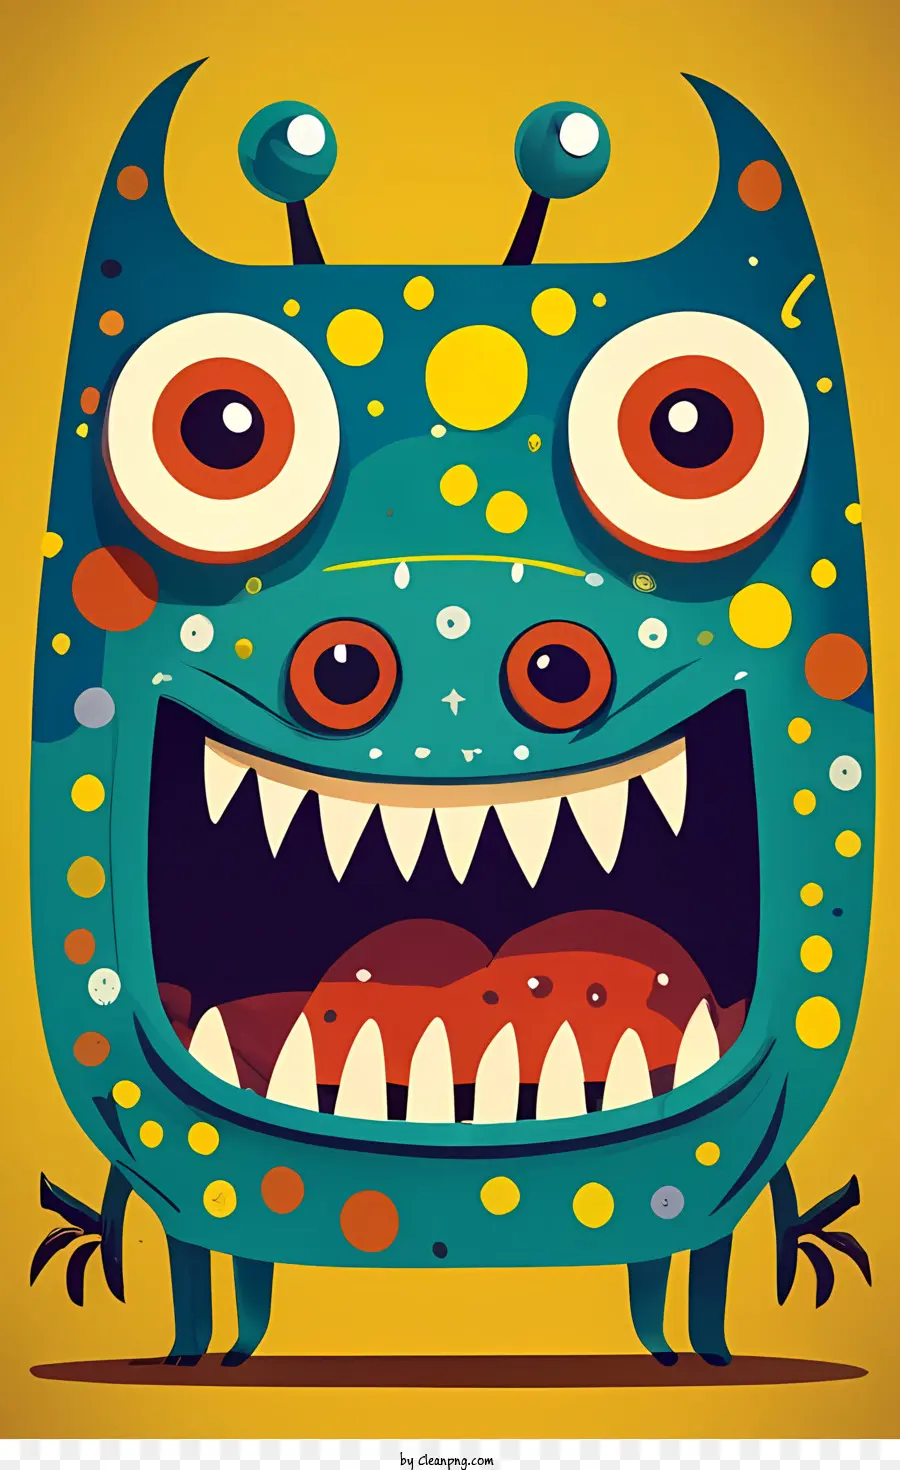 Cartoon Monster Monster süß lustig farbenfroh - 